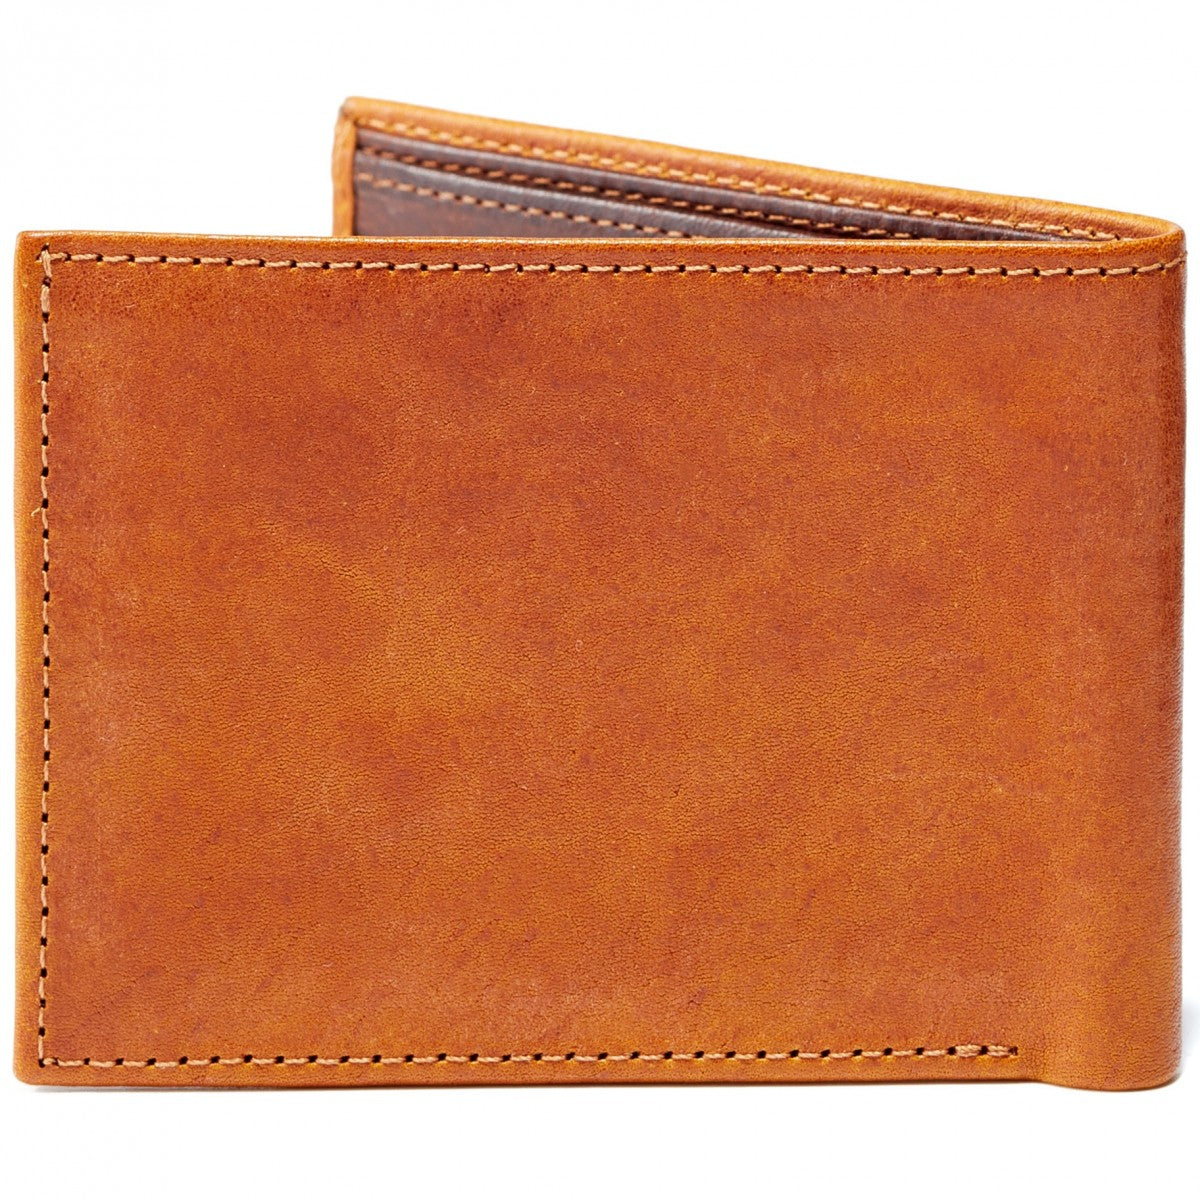 Moore & Giles Tri-Fold Wallet